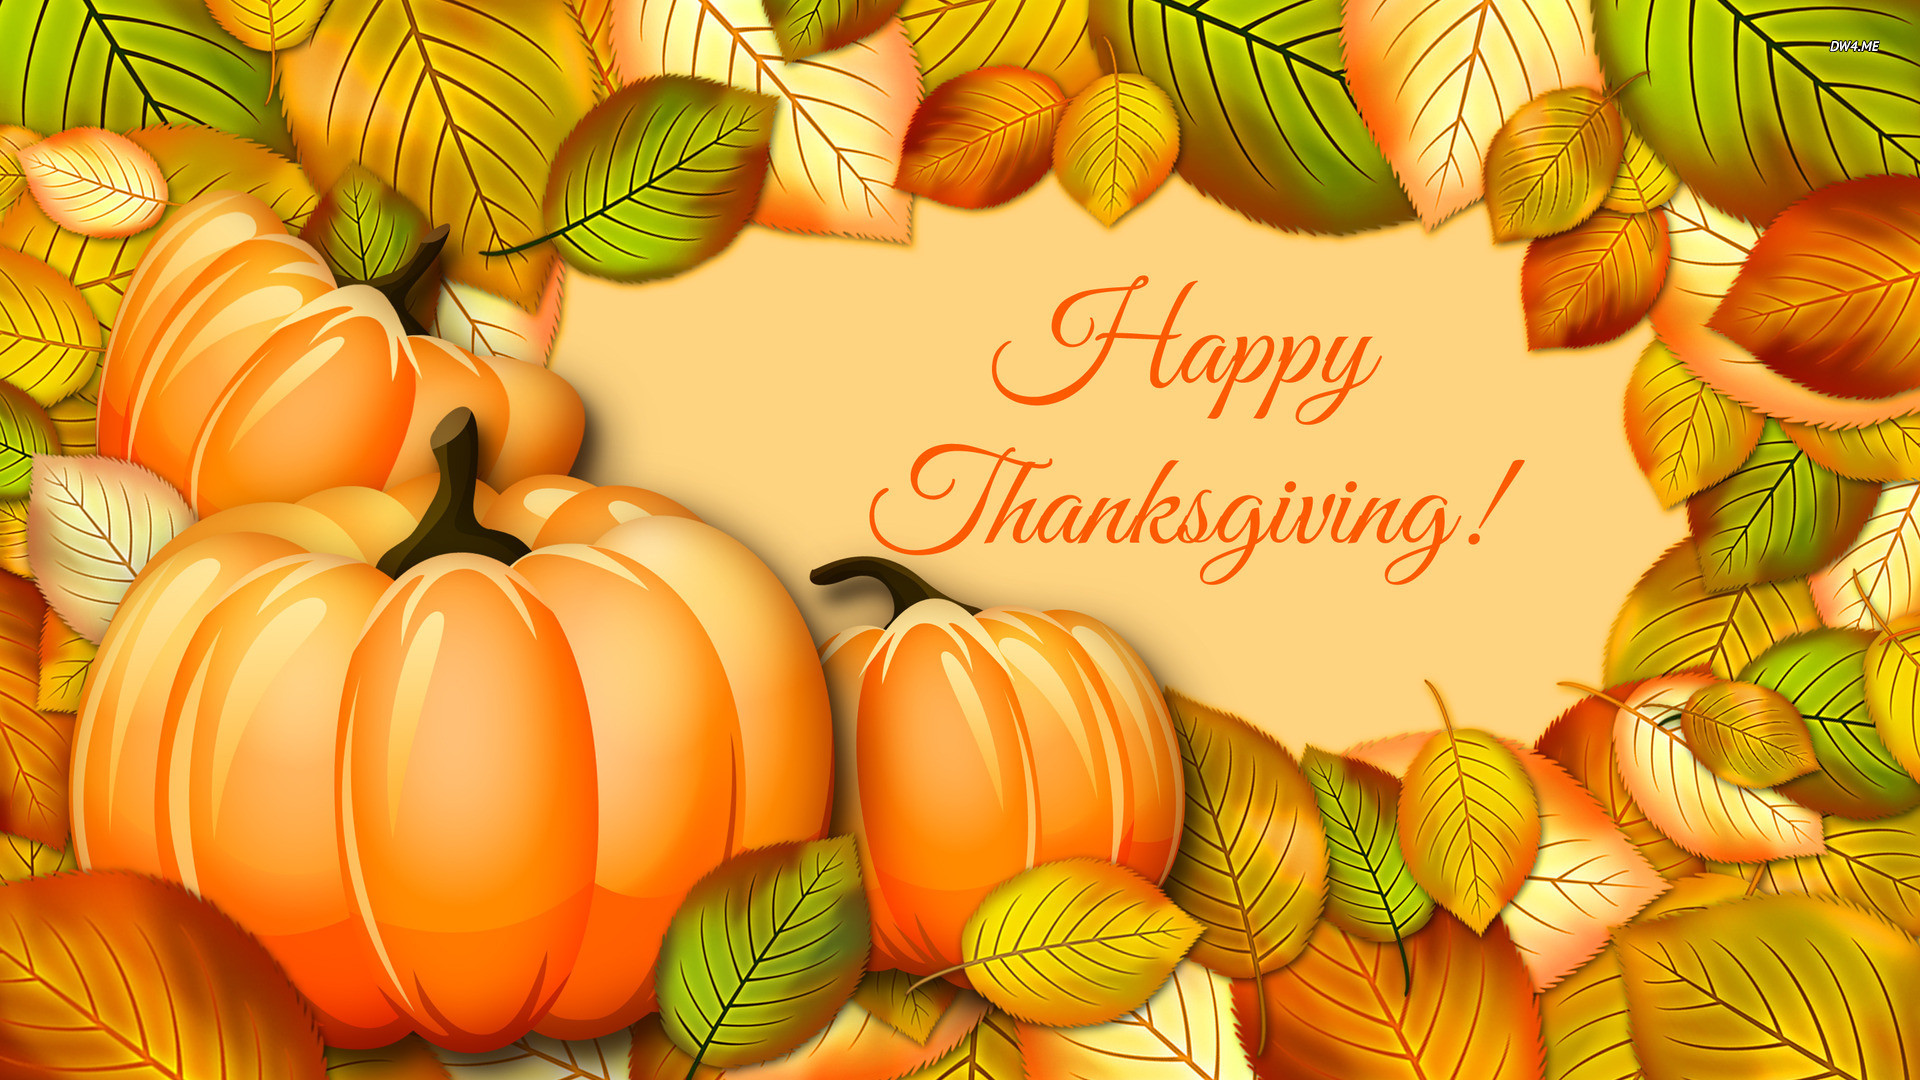 Thanksgiving Desktop Wallpaper Background Image